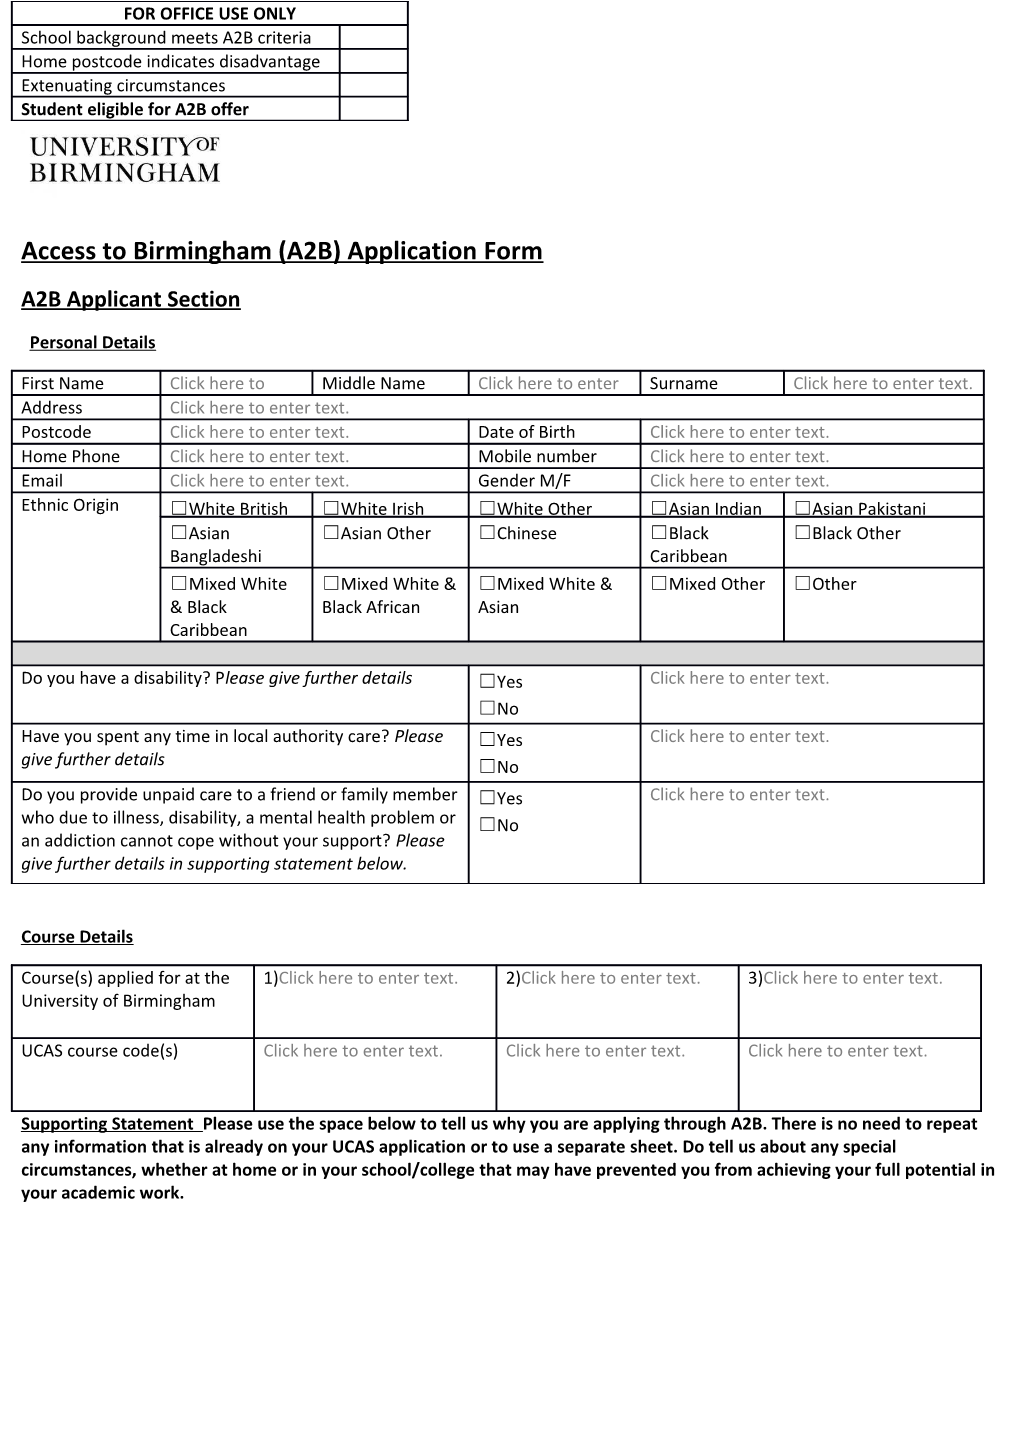 Access to Birmingham (A2B) Application Form